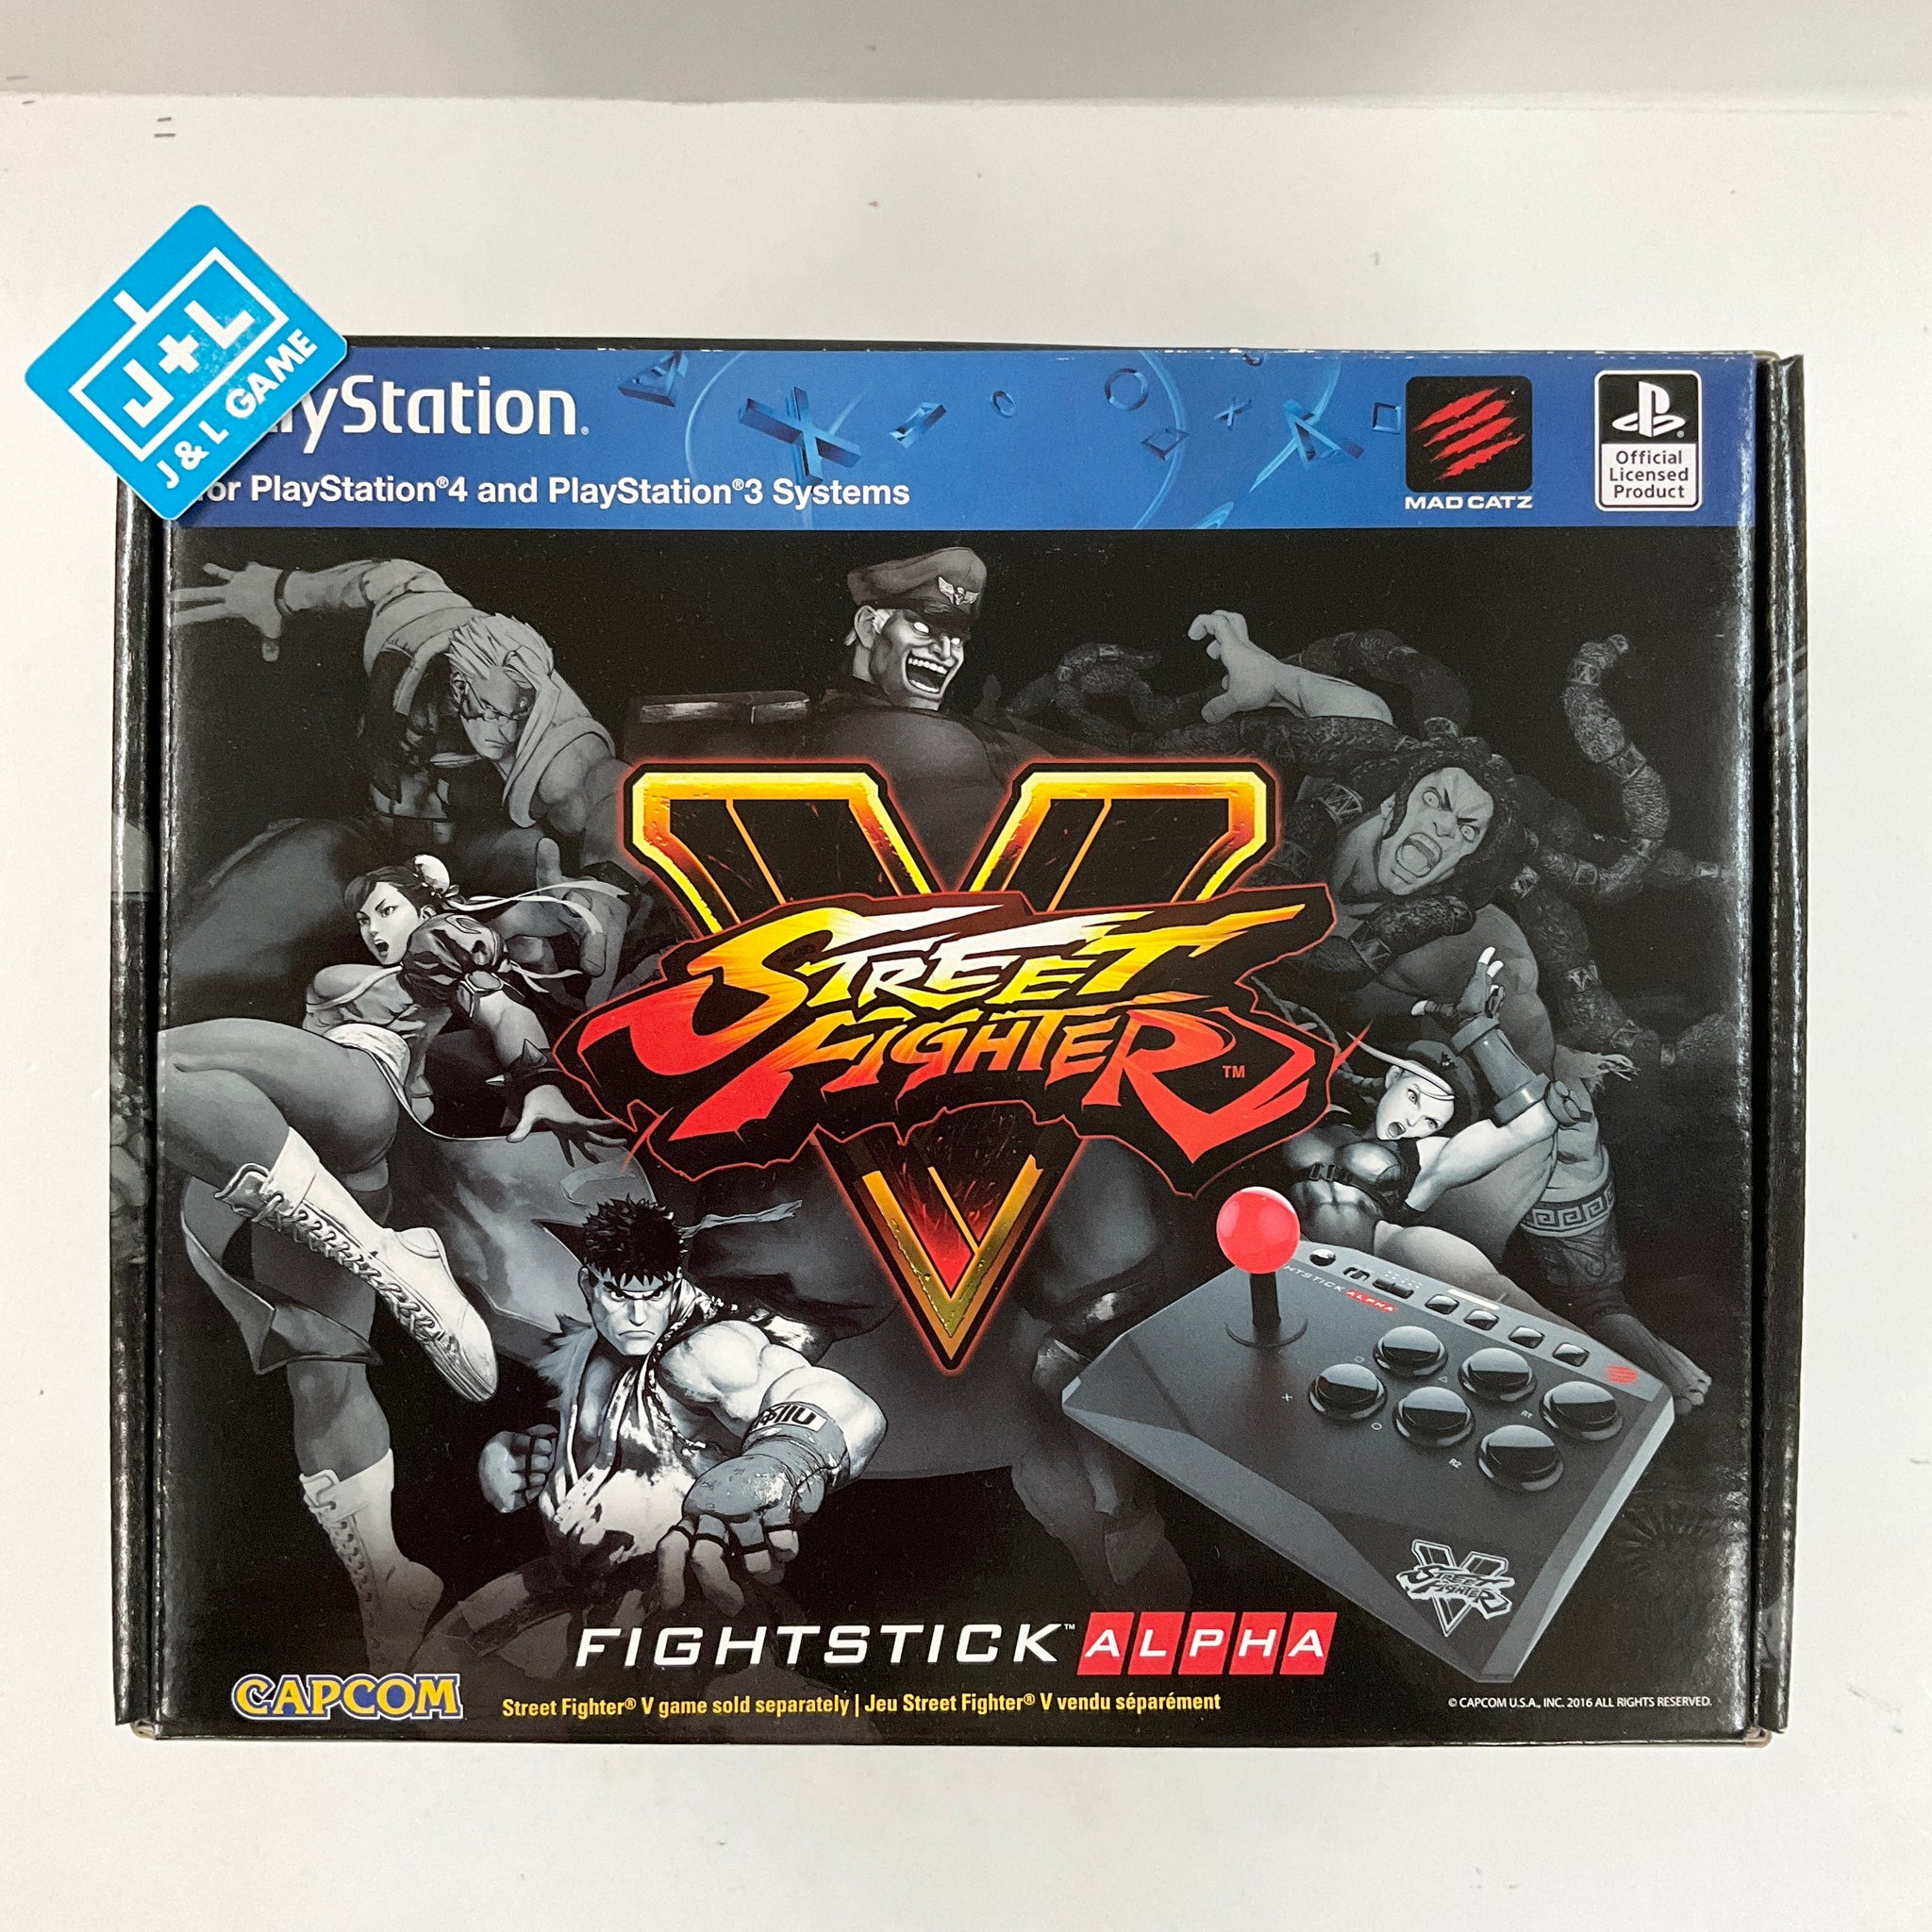 Uncharted 4, Street Fighter 5: confira melhores jogos de PS4 para 2016